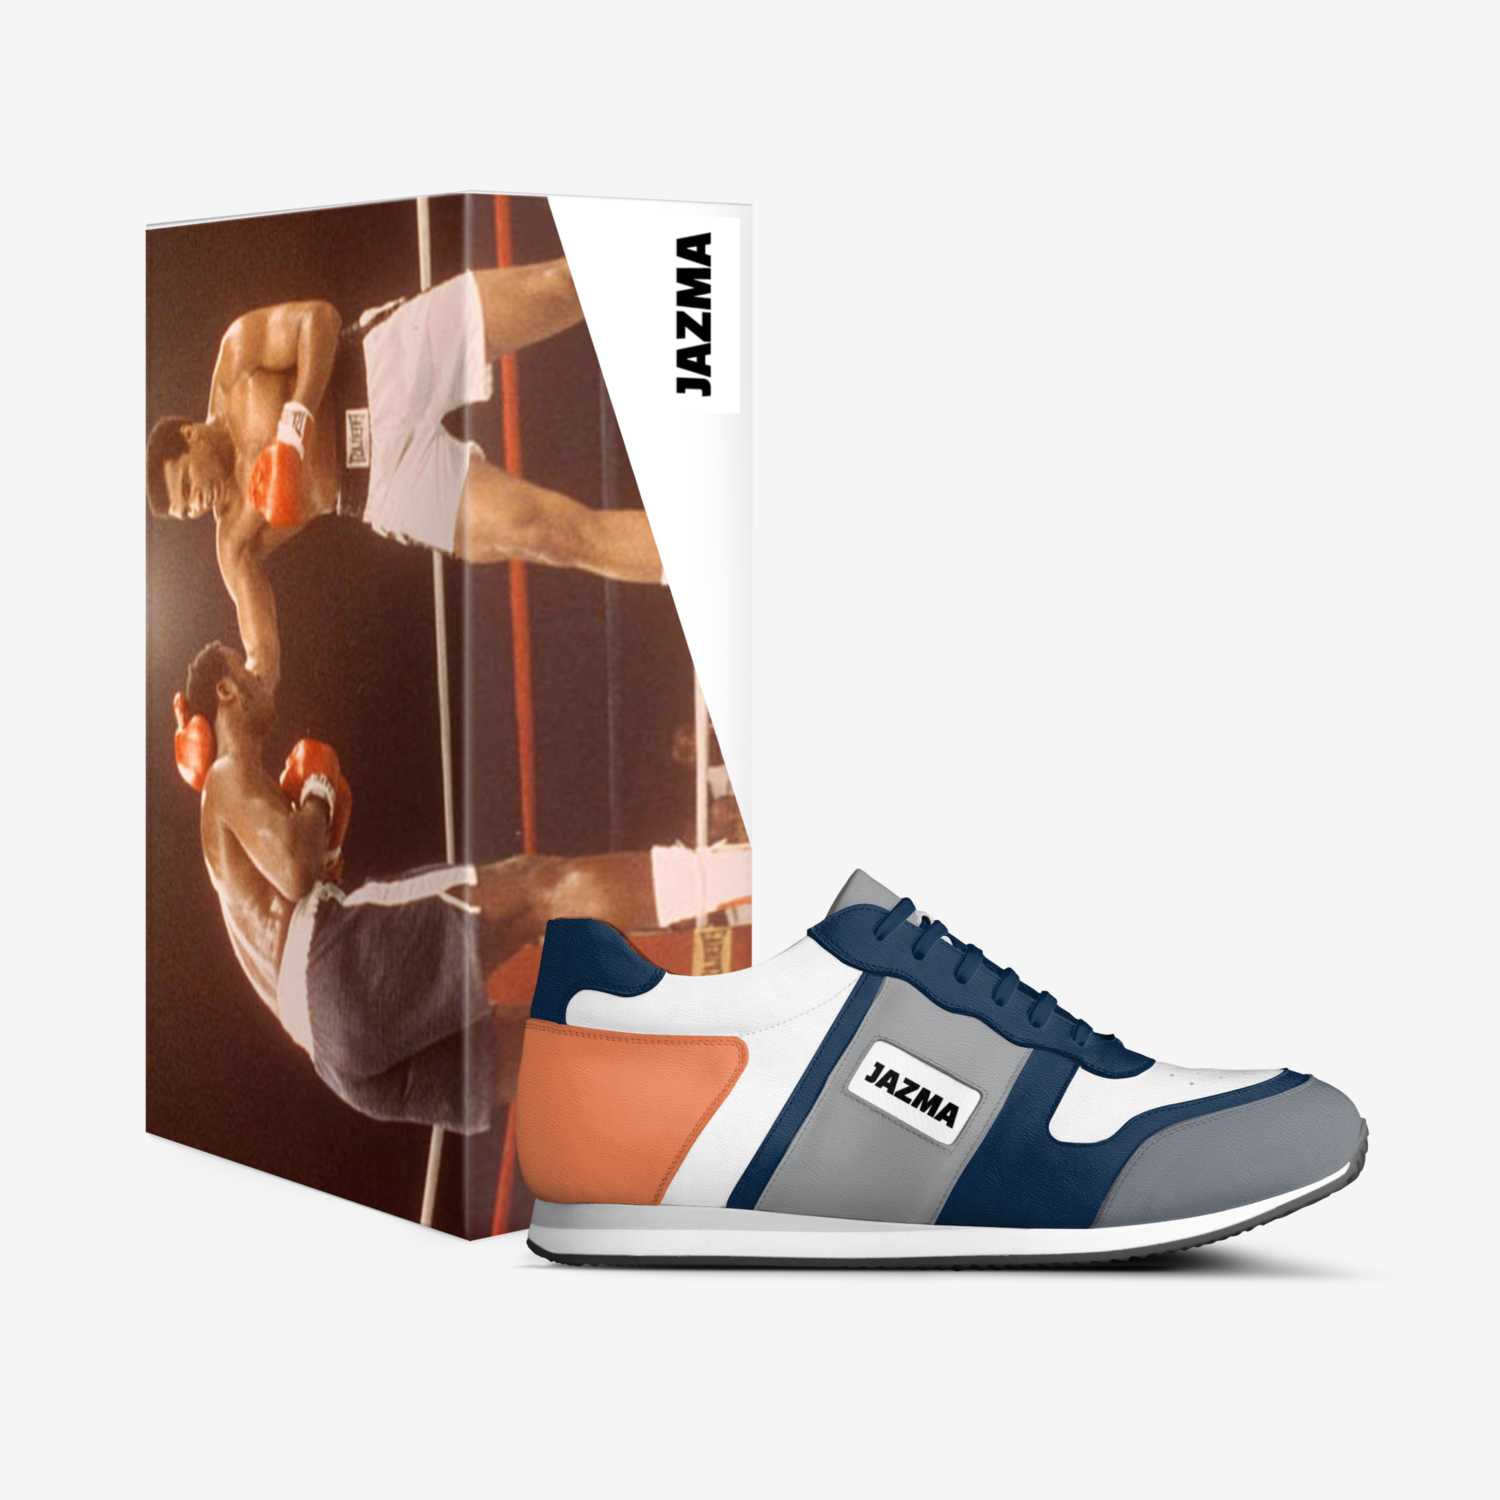 JAZMA custom made in Italy shoes by M Hakki | Box view